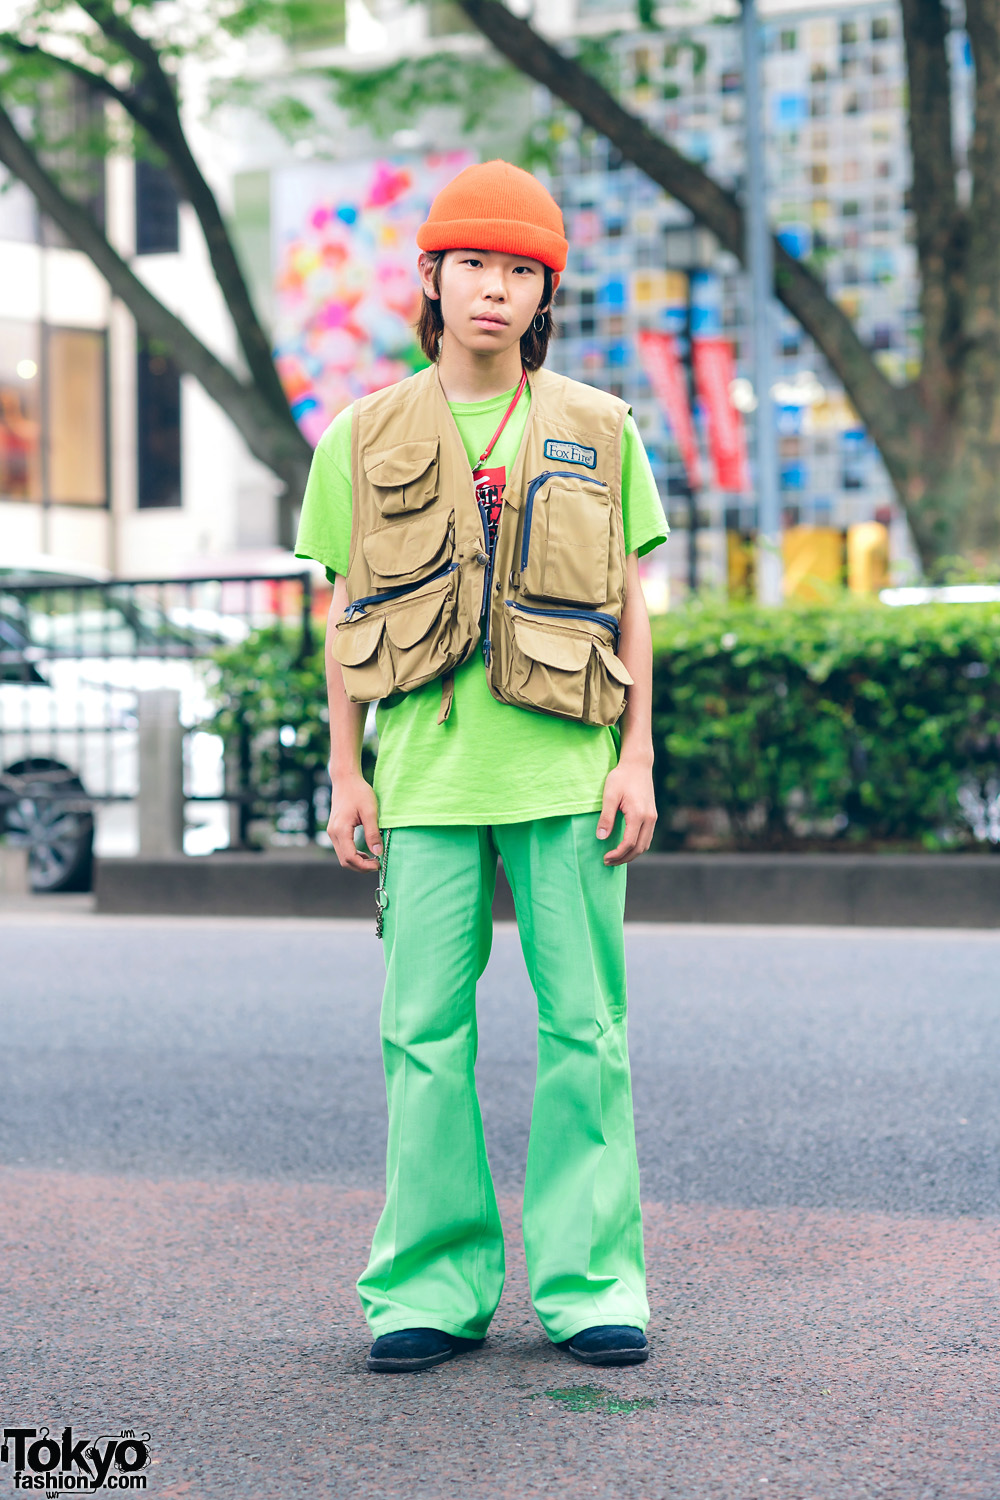 Harajuku Teen's Street Style w/ Orange Beanie, Utility Vest, Black Eye Patch, Flared Pants & Hawkins Suede Shoes